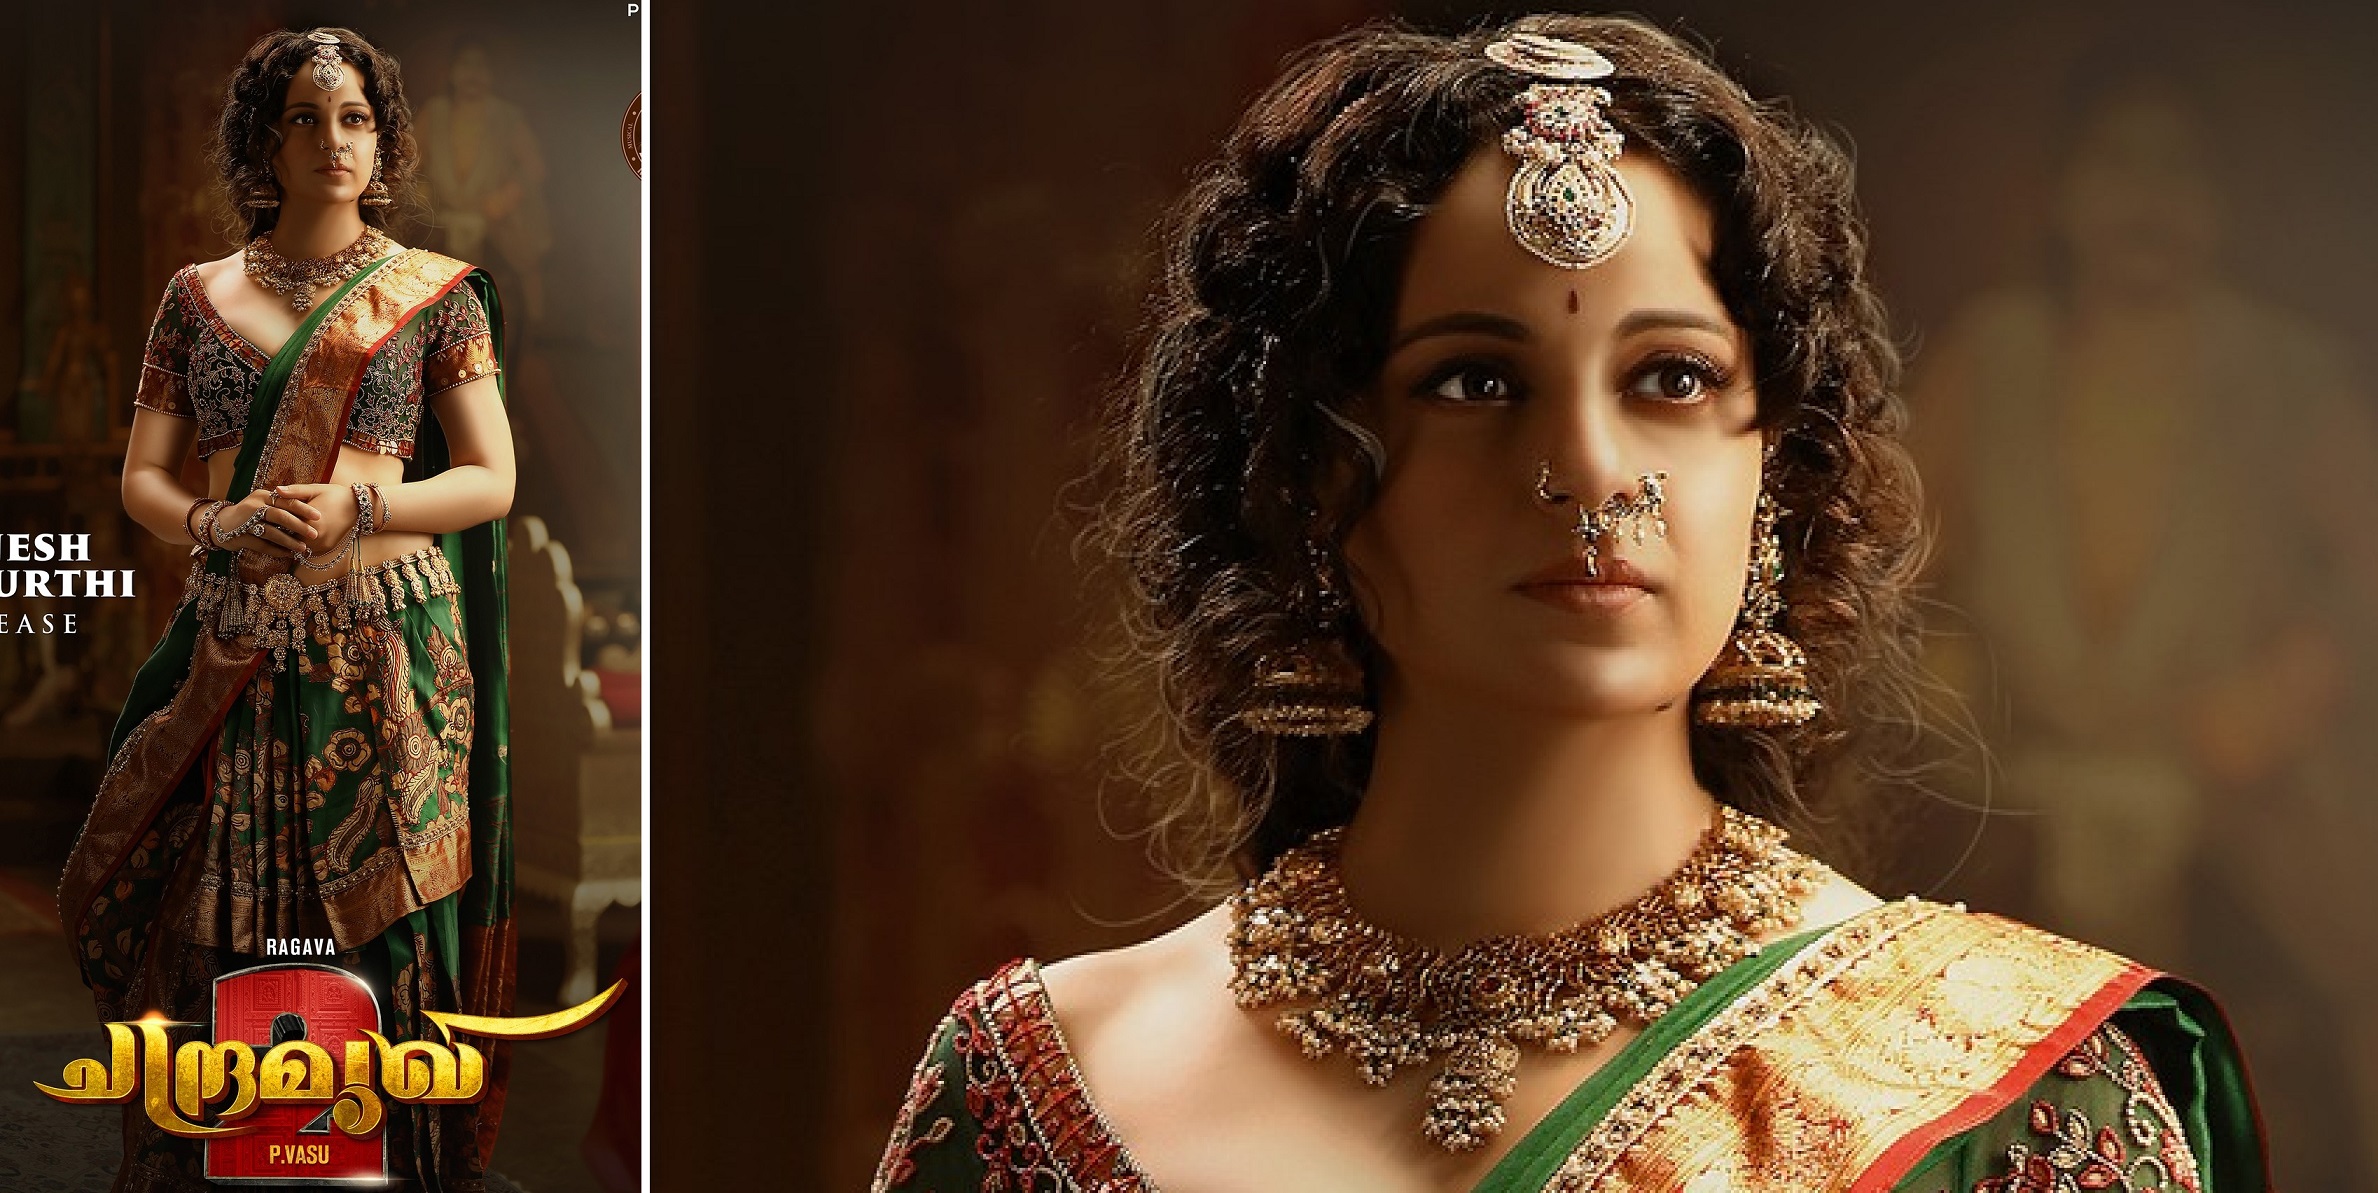 Kangana Ranaut Shares First Look From Her Upcoming Film Chandramukhi 2